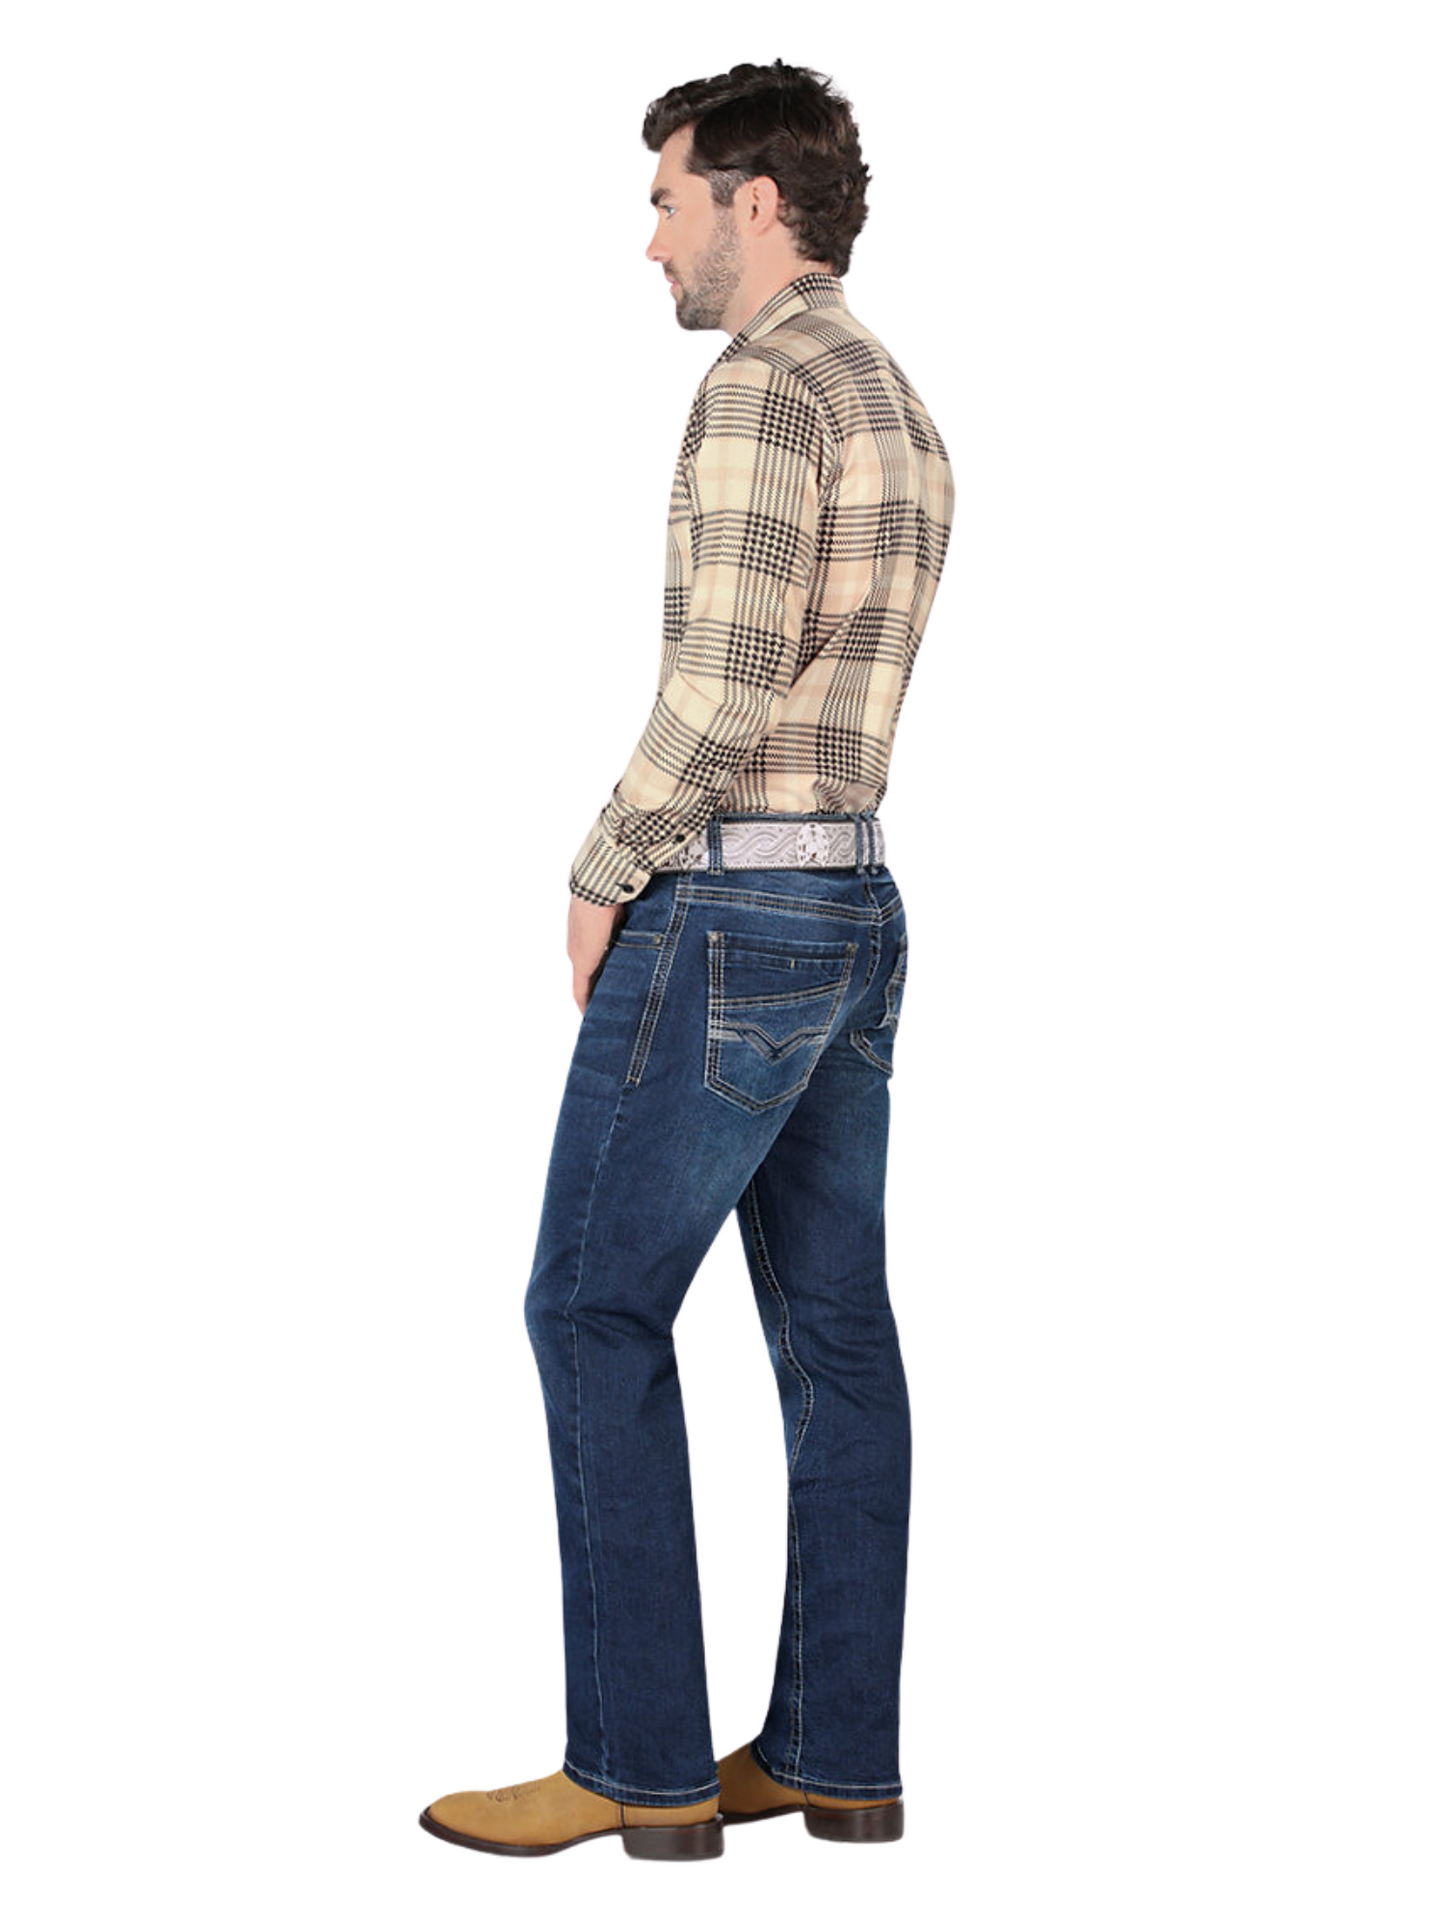 Stretch Denim Jeans for Men 'Montero' - ID: 4604 Denim Jeans Montero